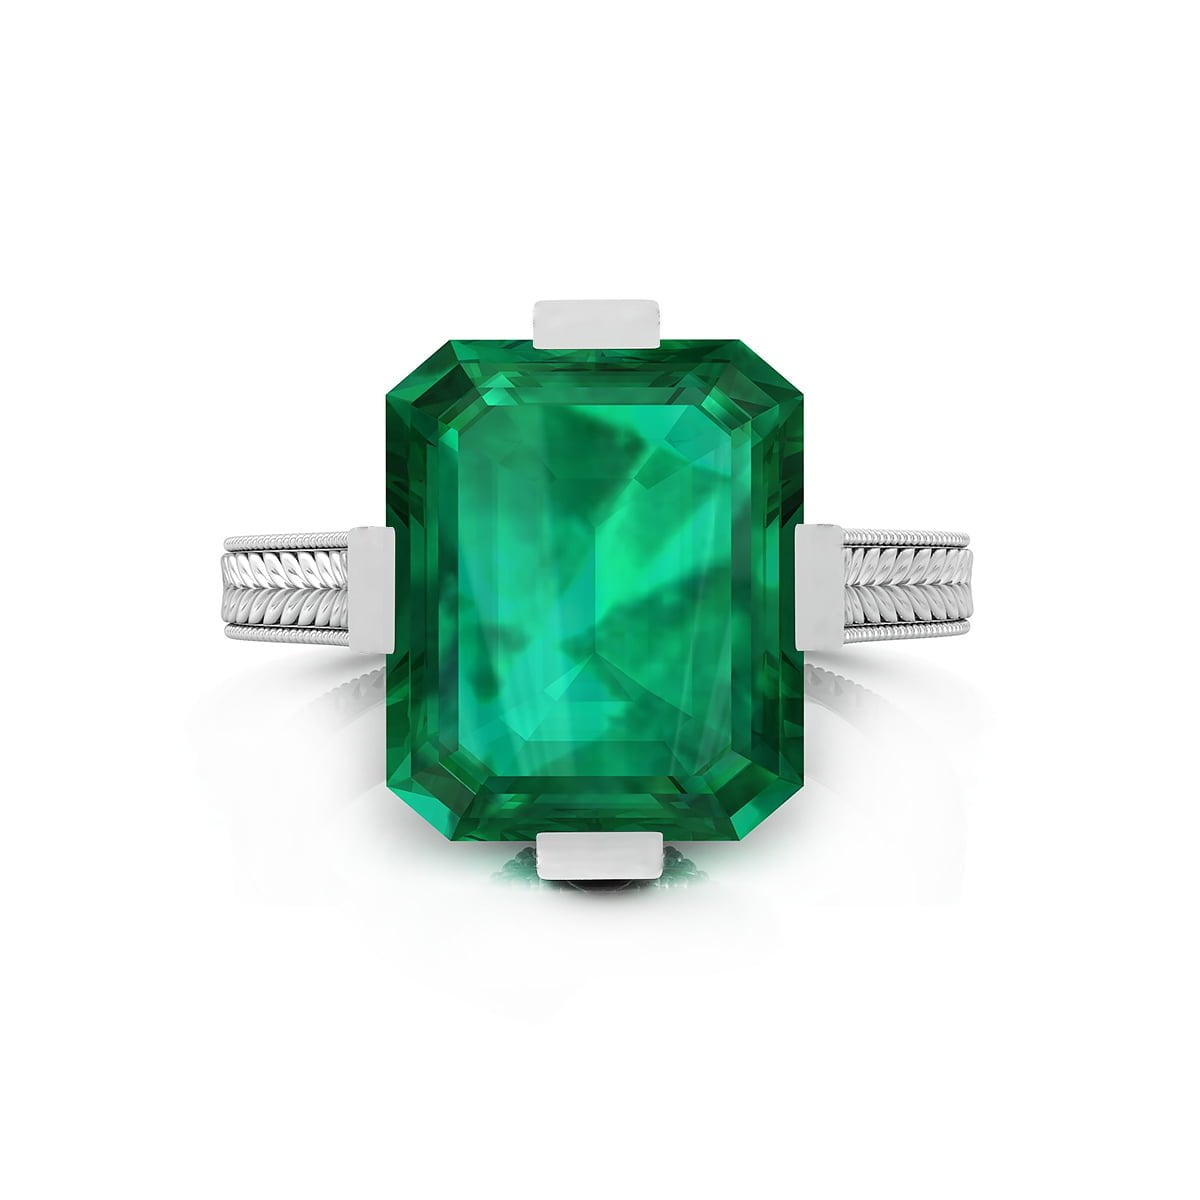 Green Emerald Cut CZ Stone Antique Art Deco Solitaire Ring For Women